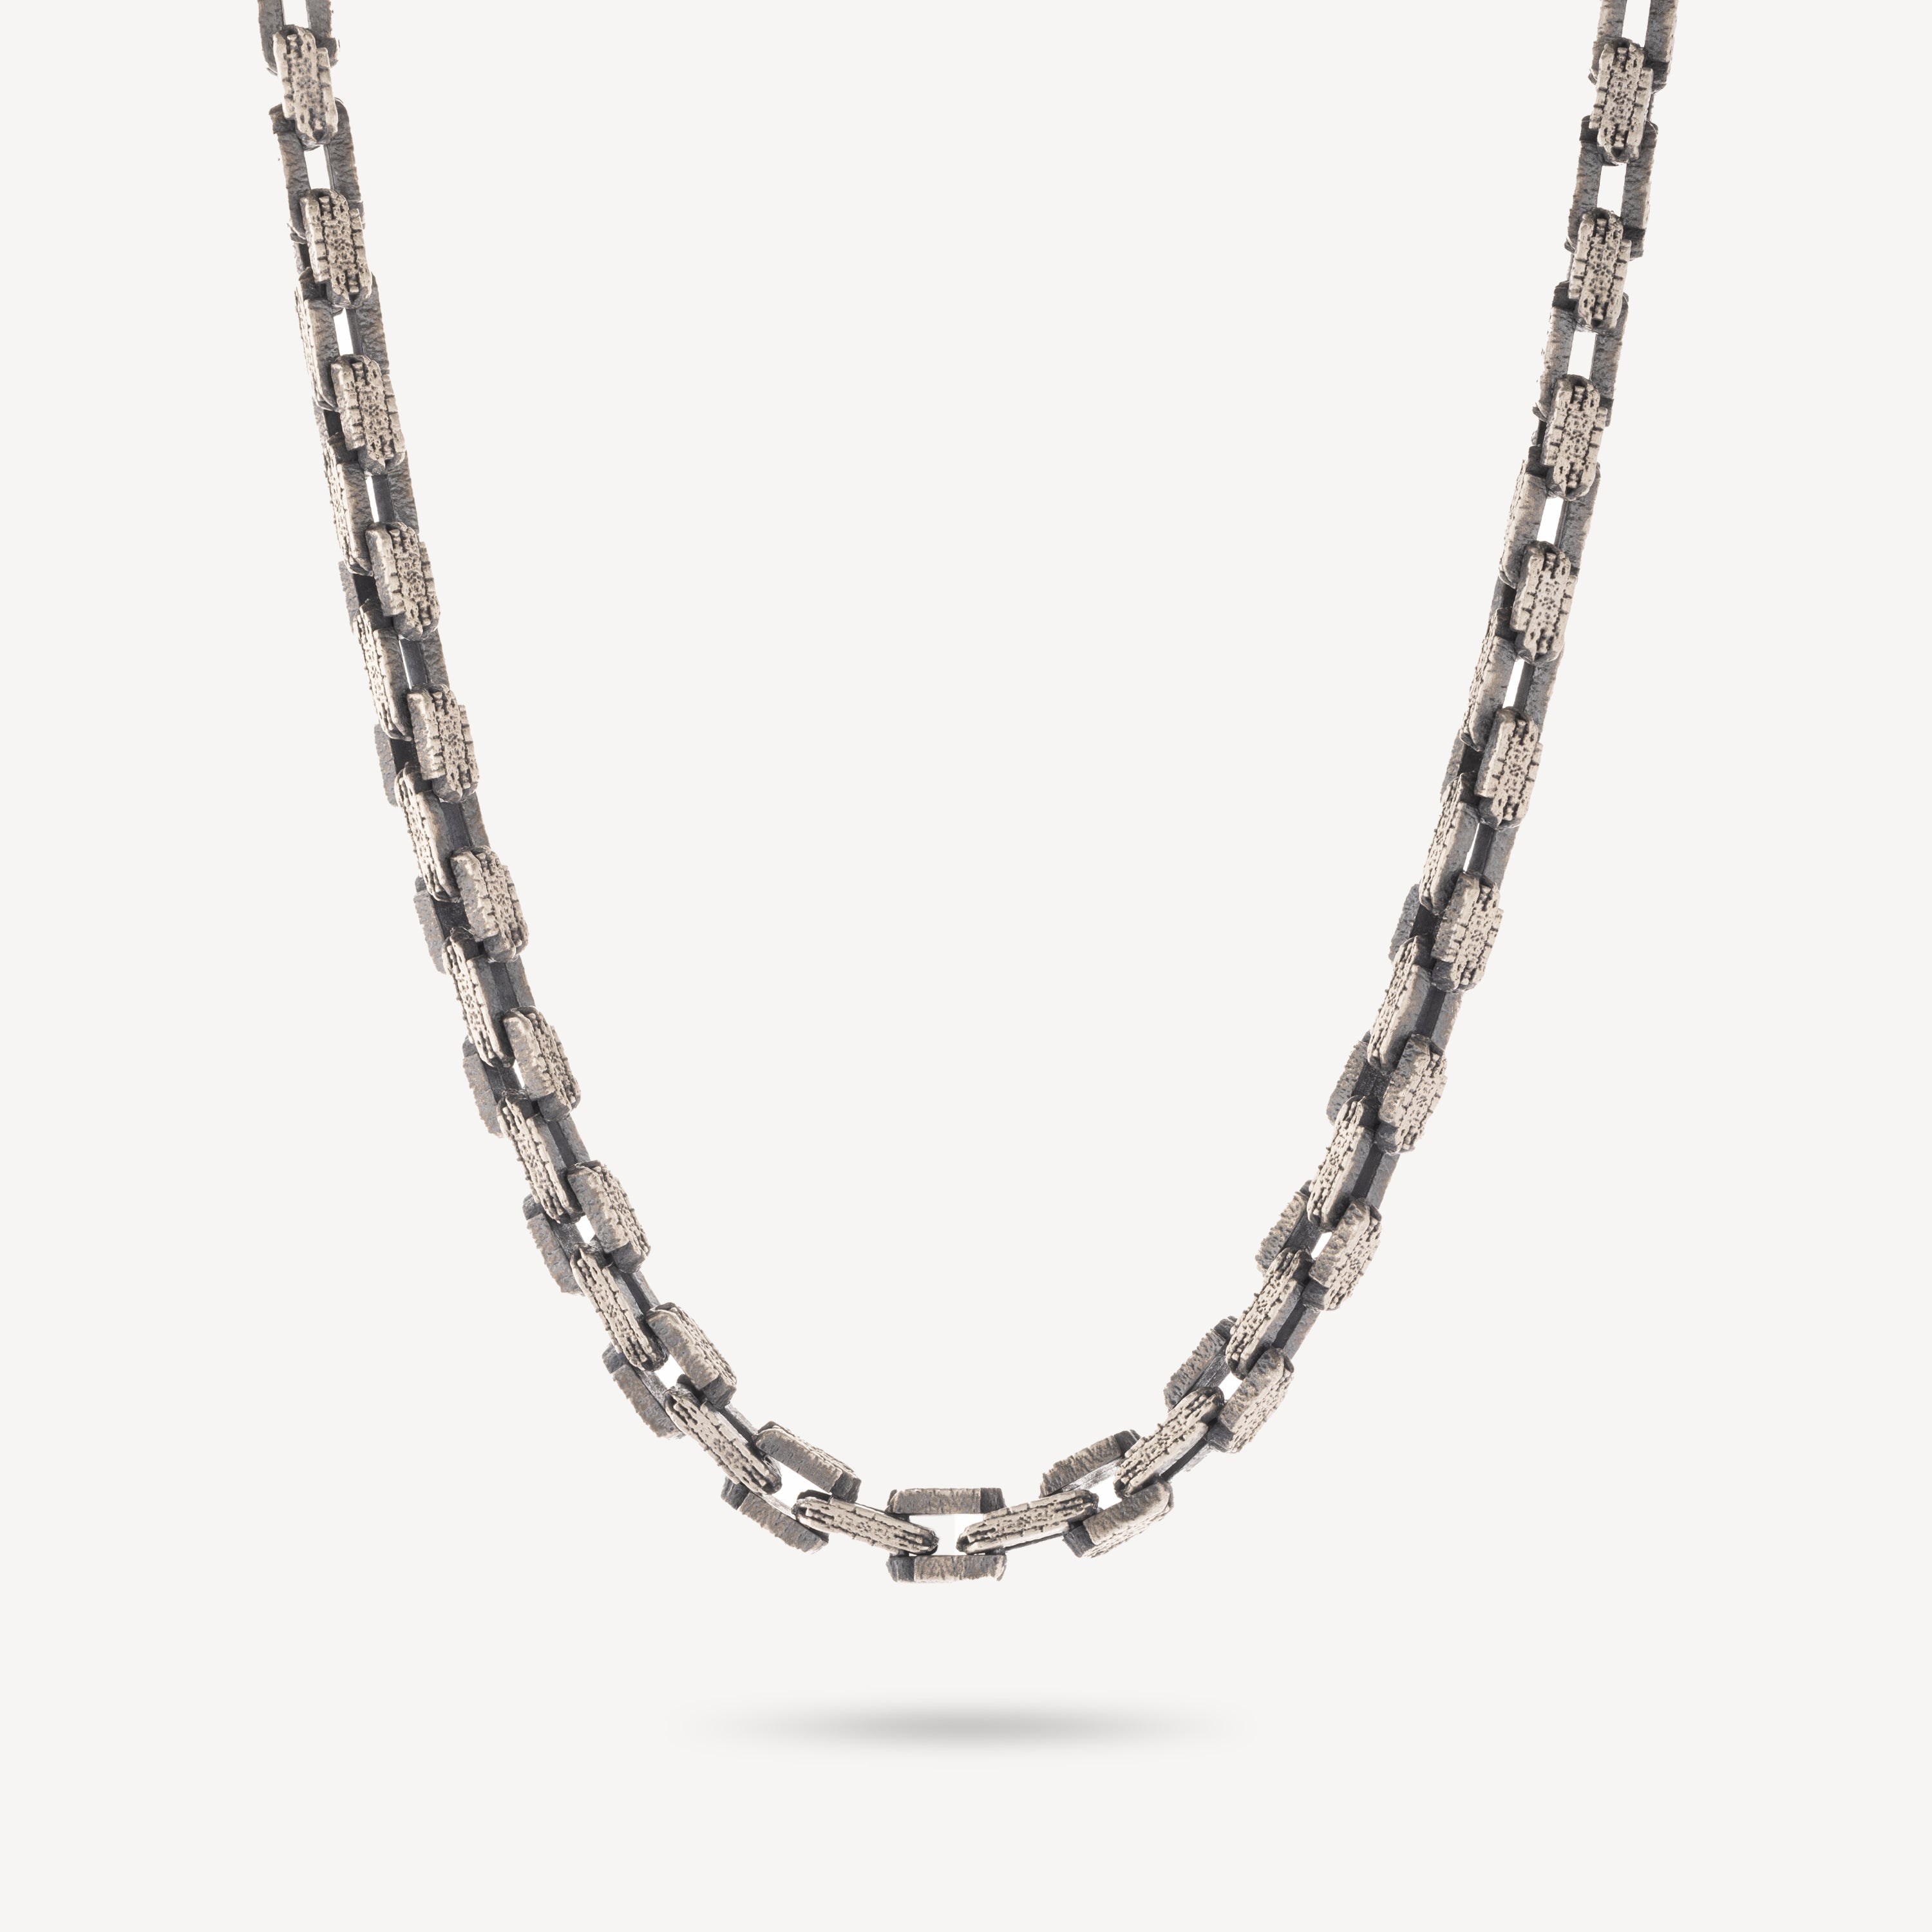 AZK-VK01 Large Silver Necklace